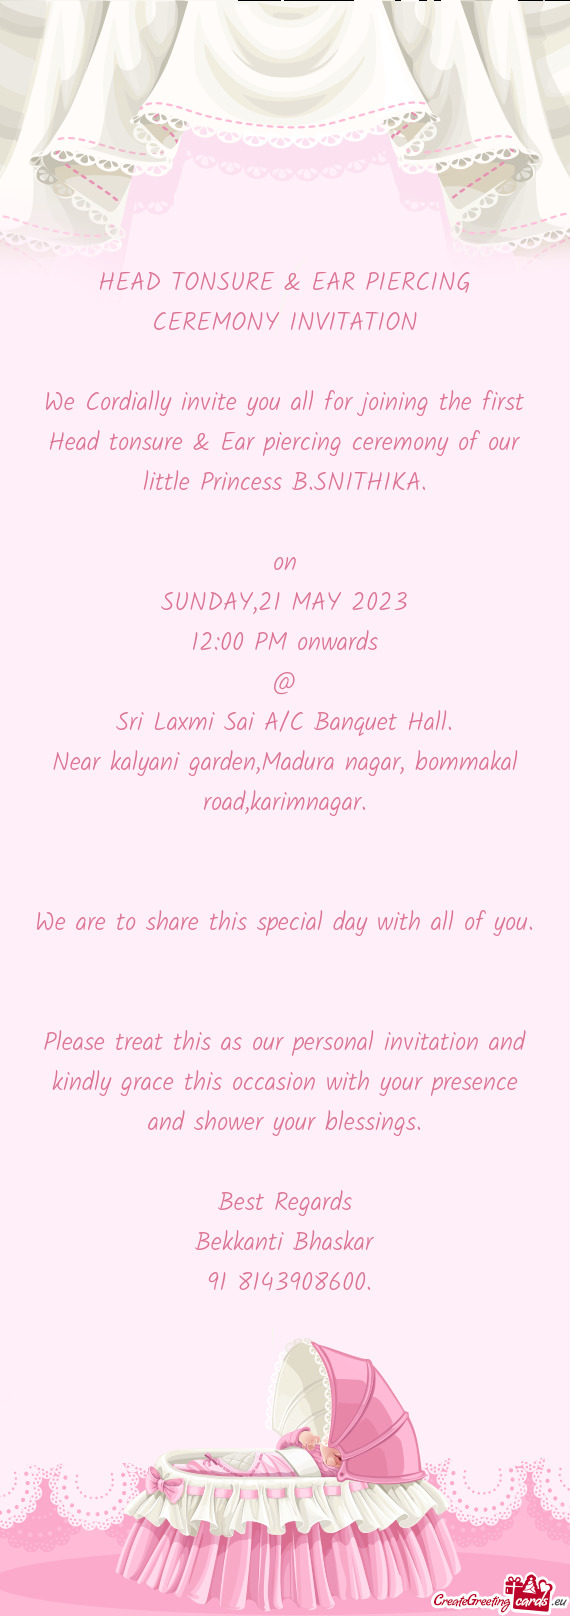 Sri Laxmi Sai A/C Banquet Hall